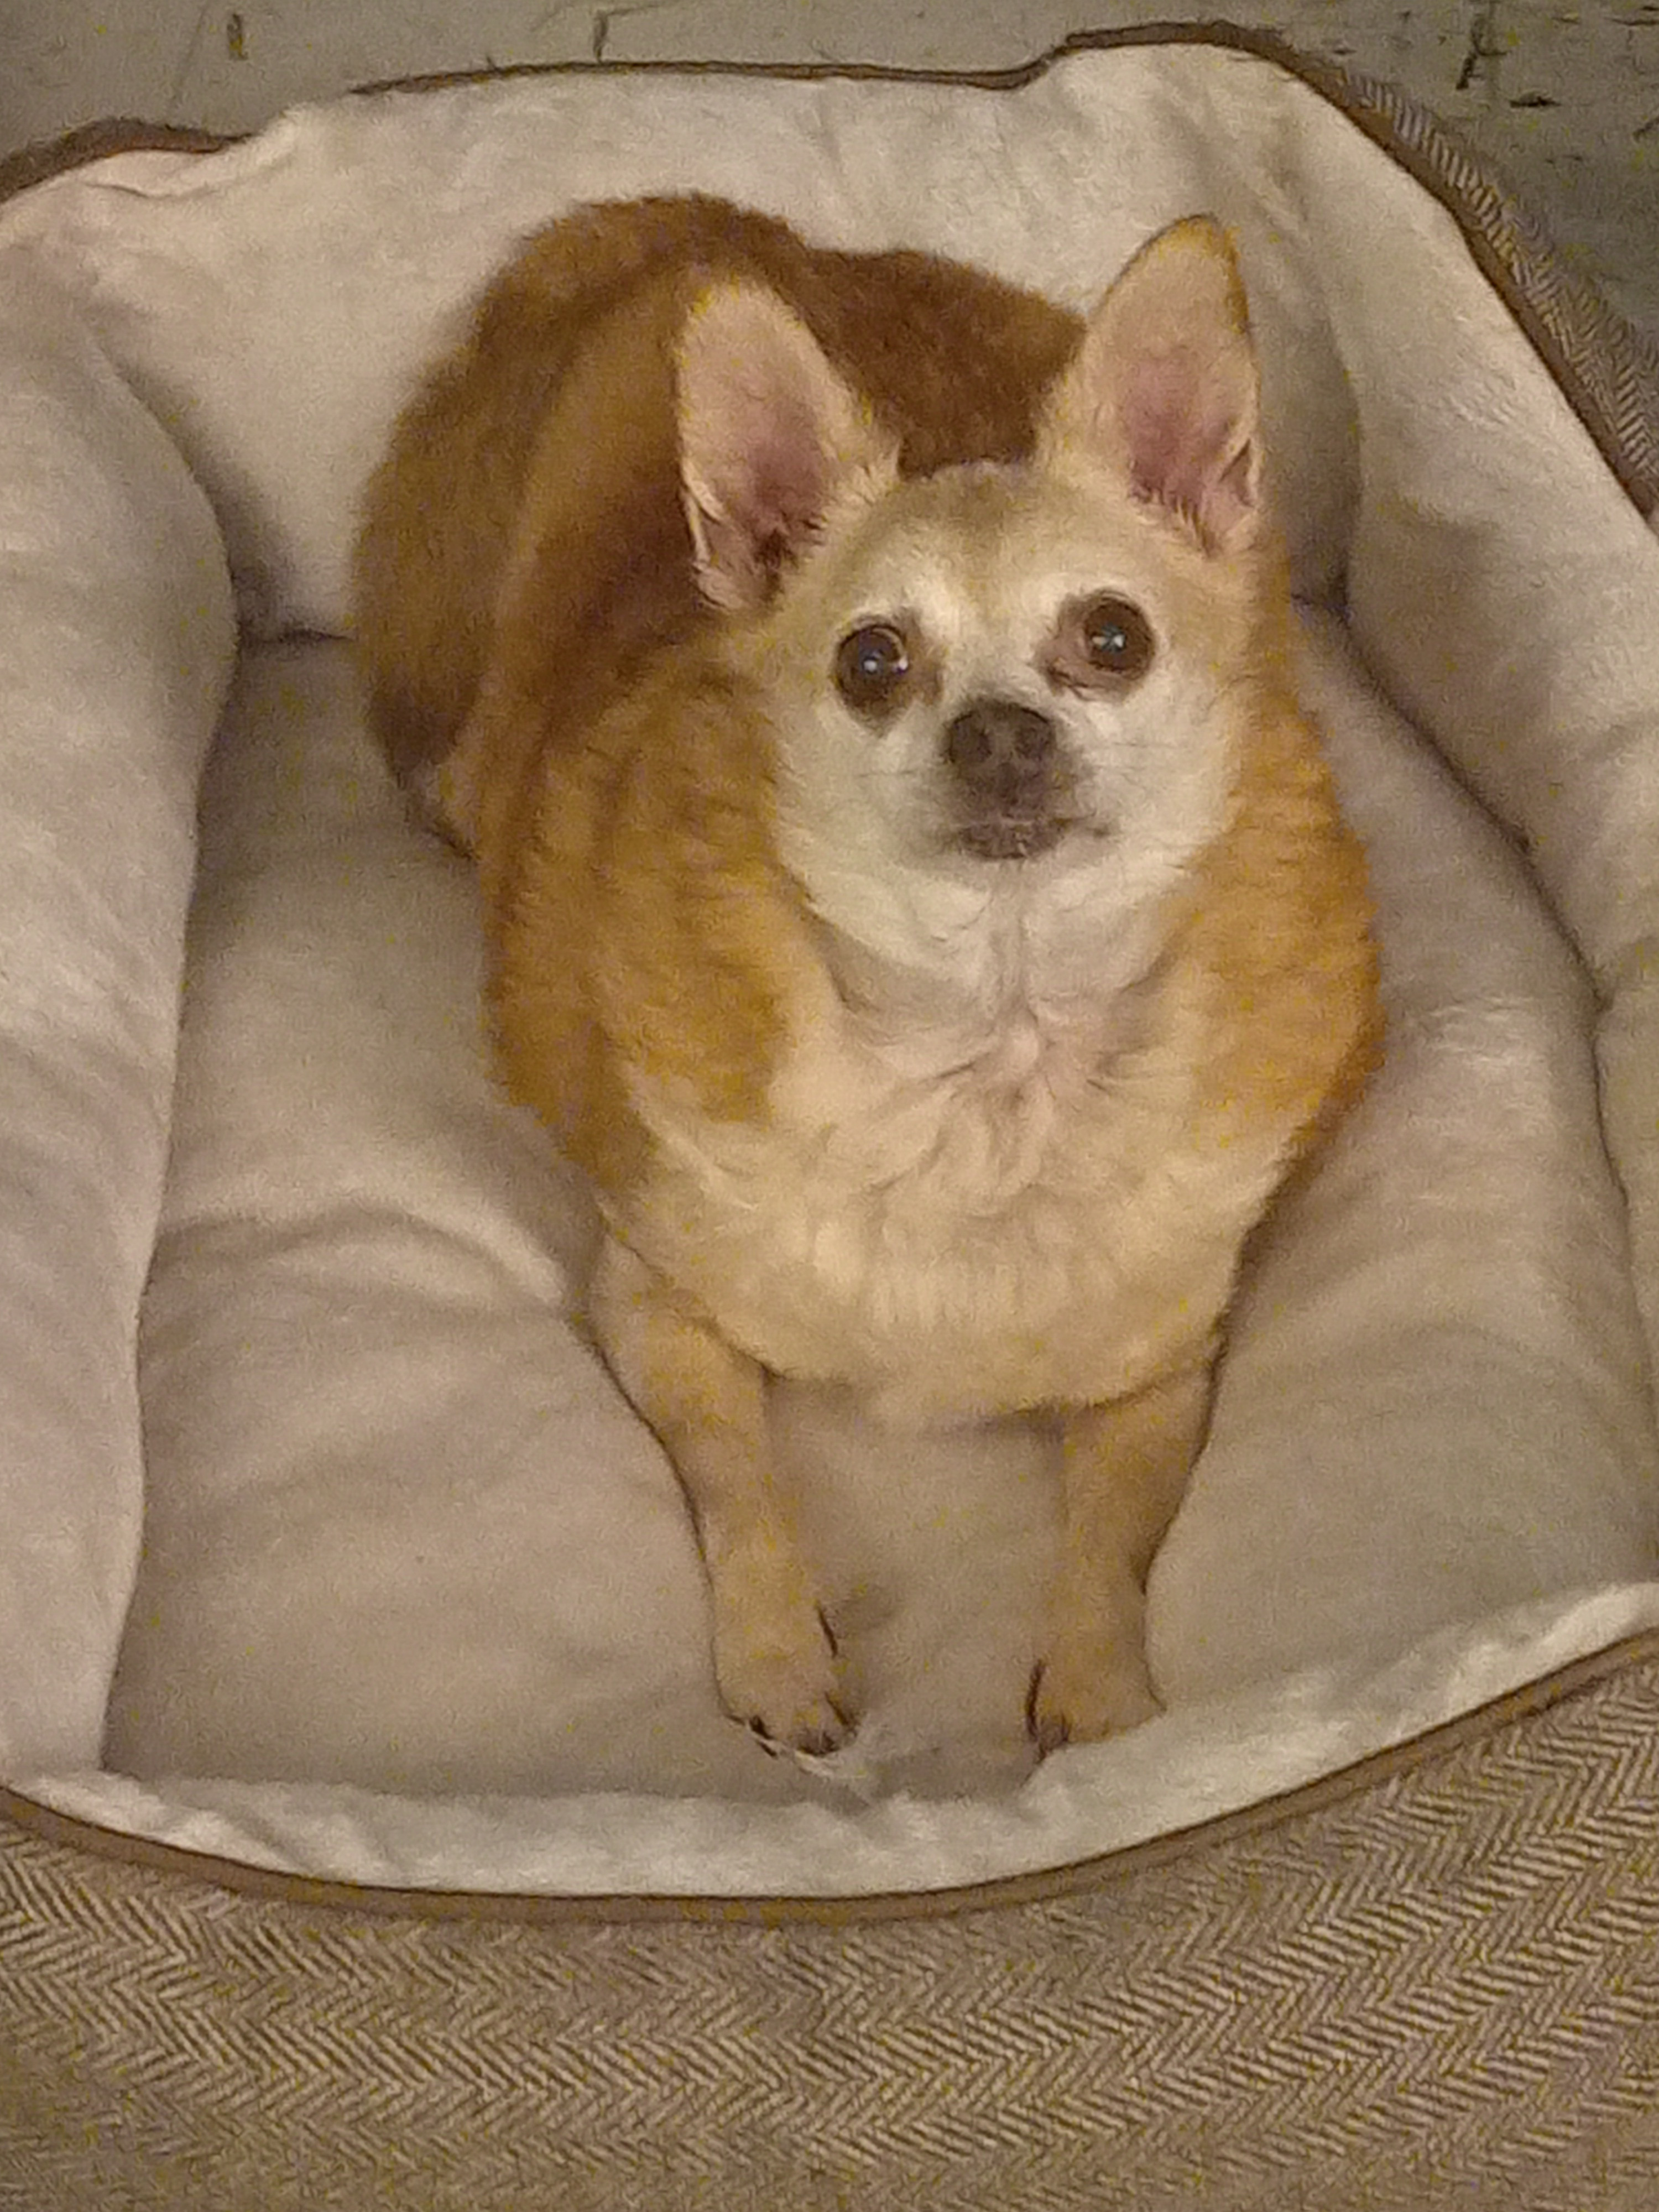 Little Boy (Puddin' Pie), an adoptable Chihuahua in Roanoke, VA, 24016 | Photo Image 1